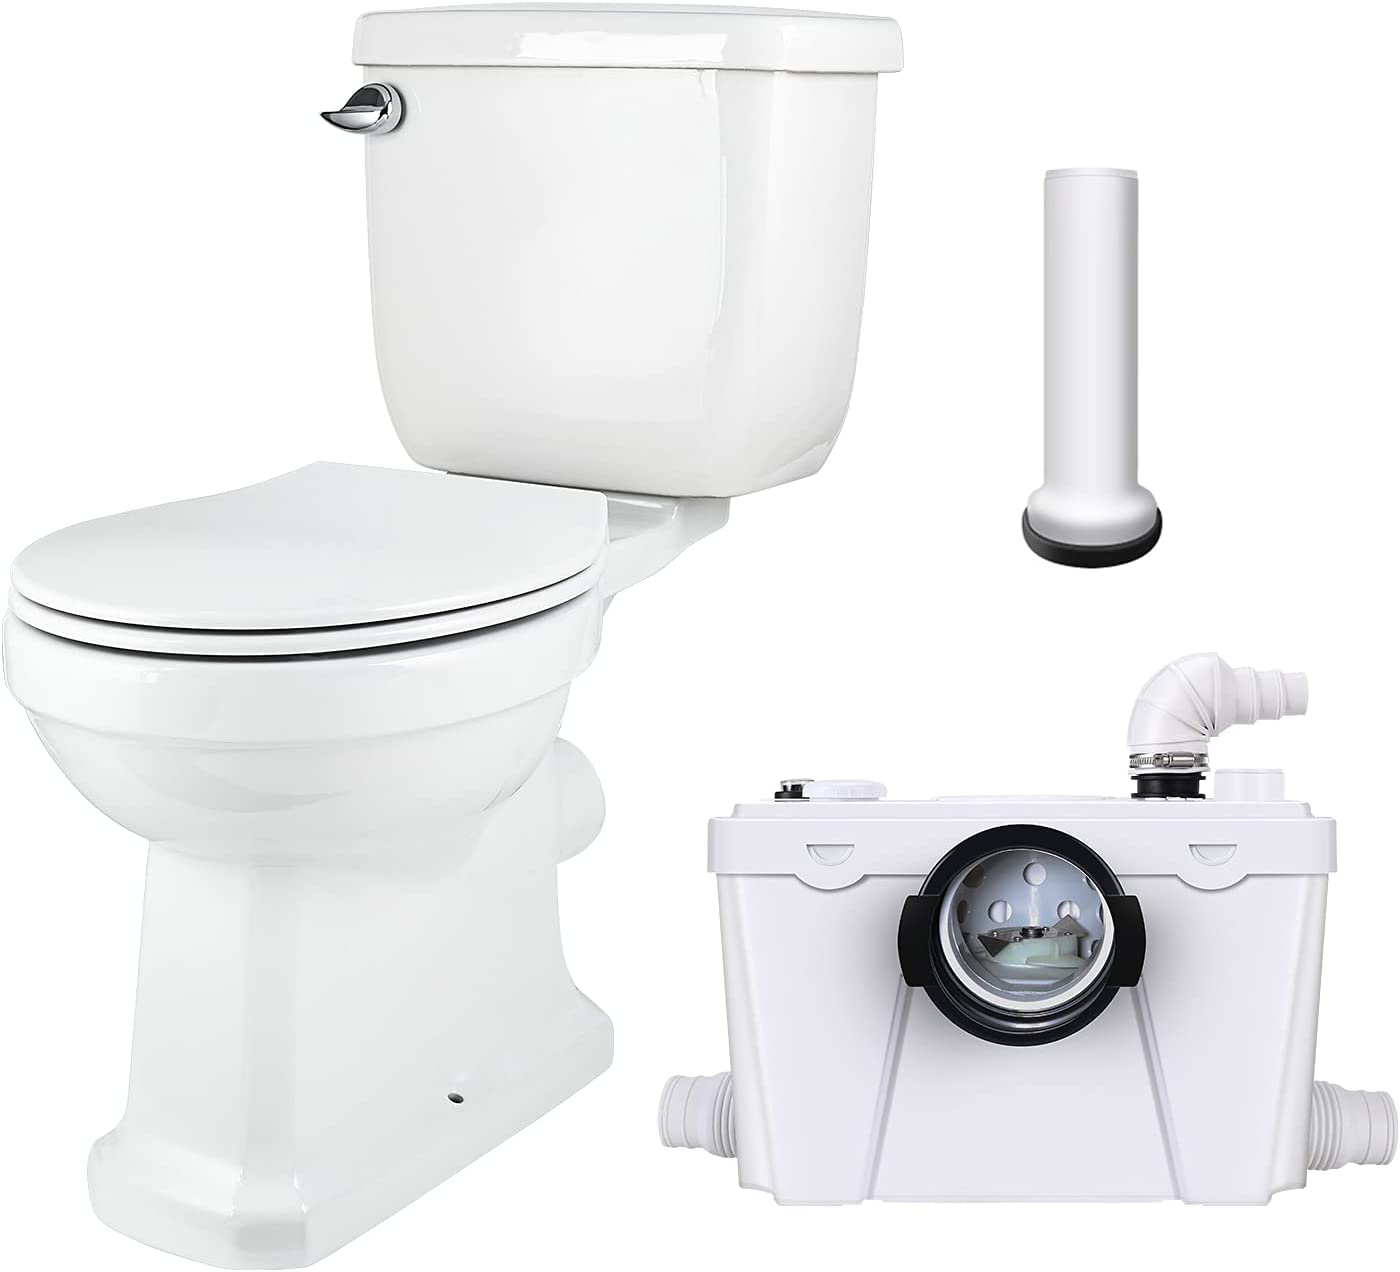 Sanimove FLO500 Upflush Toilet System